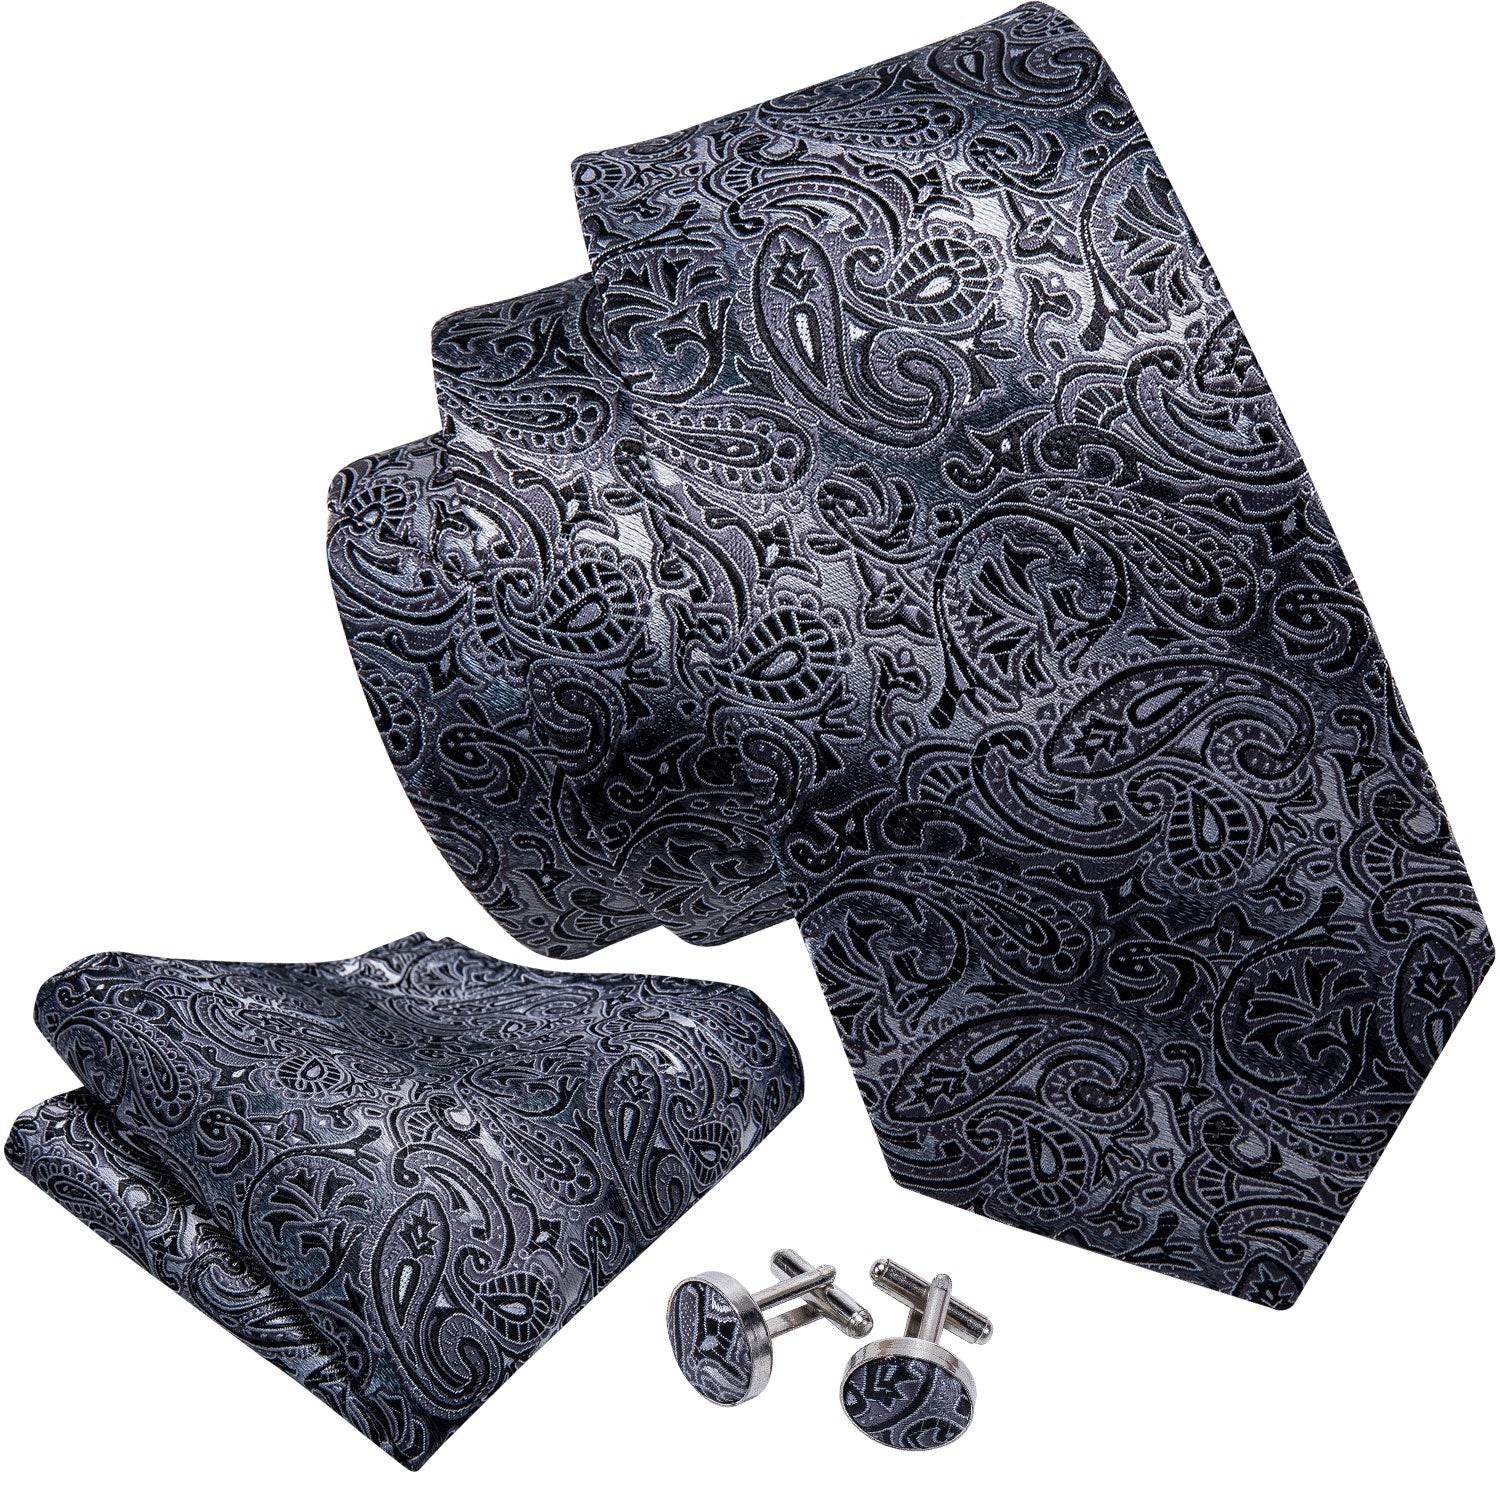 Barry.wang Black Tie Grey Paisley Men's Silk Tie Pocket Square Cufflinks Set